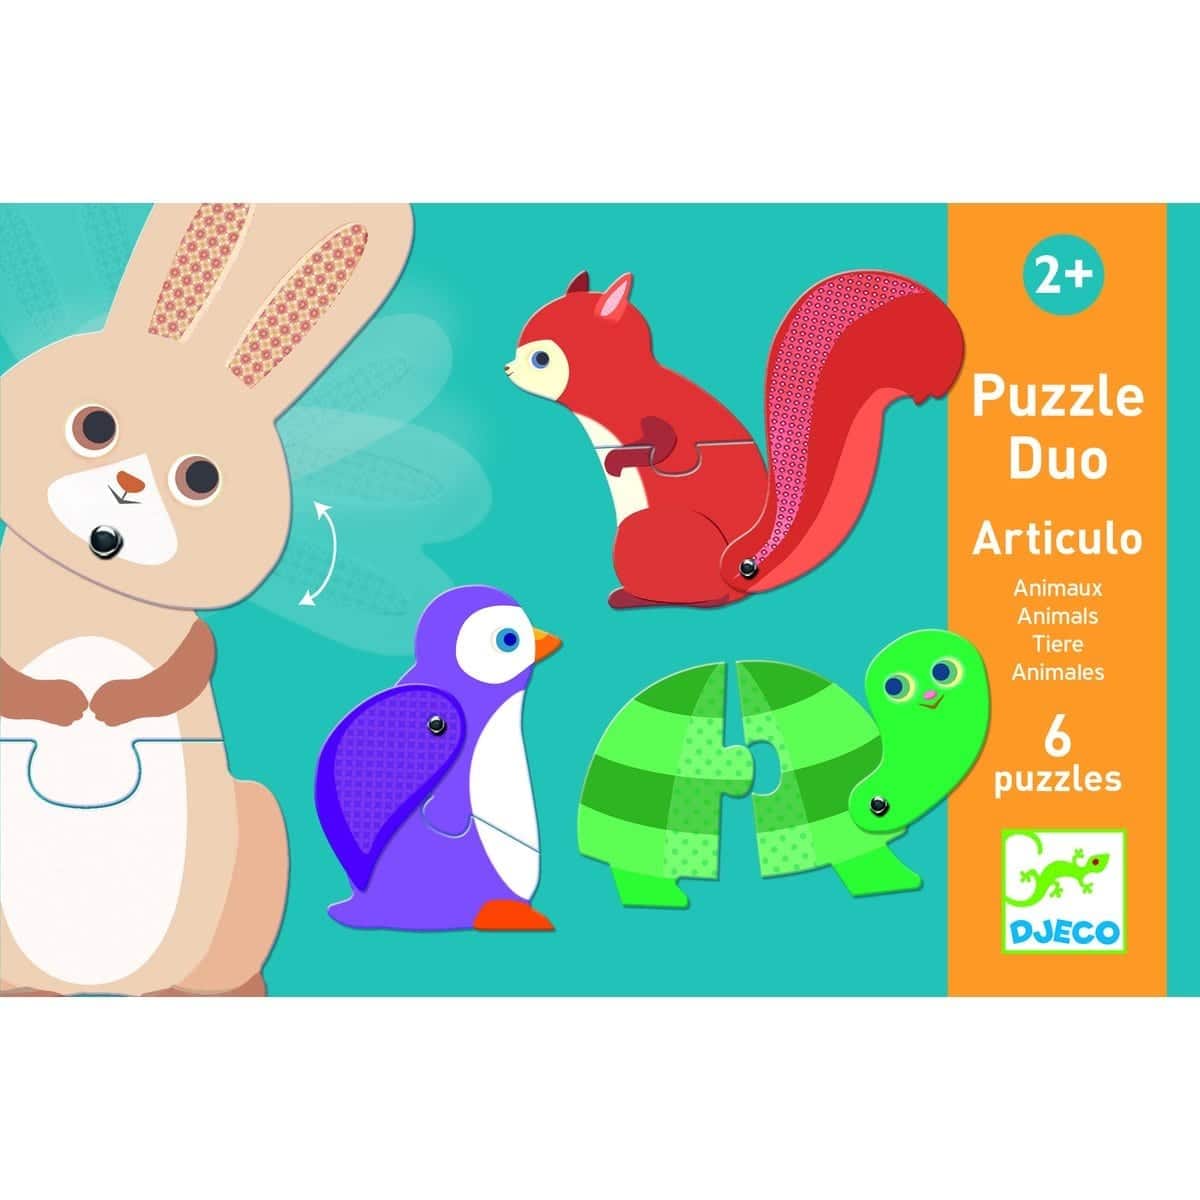 Puzzle duo "Animais" 2+ | Djeco Mini-Me - Baby & Kids Store